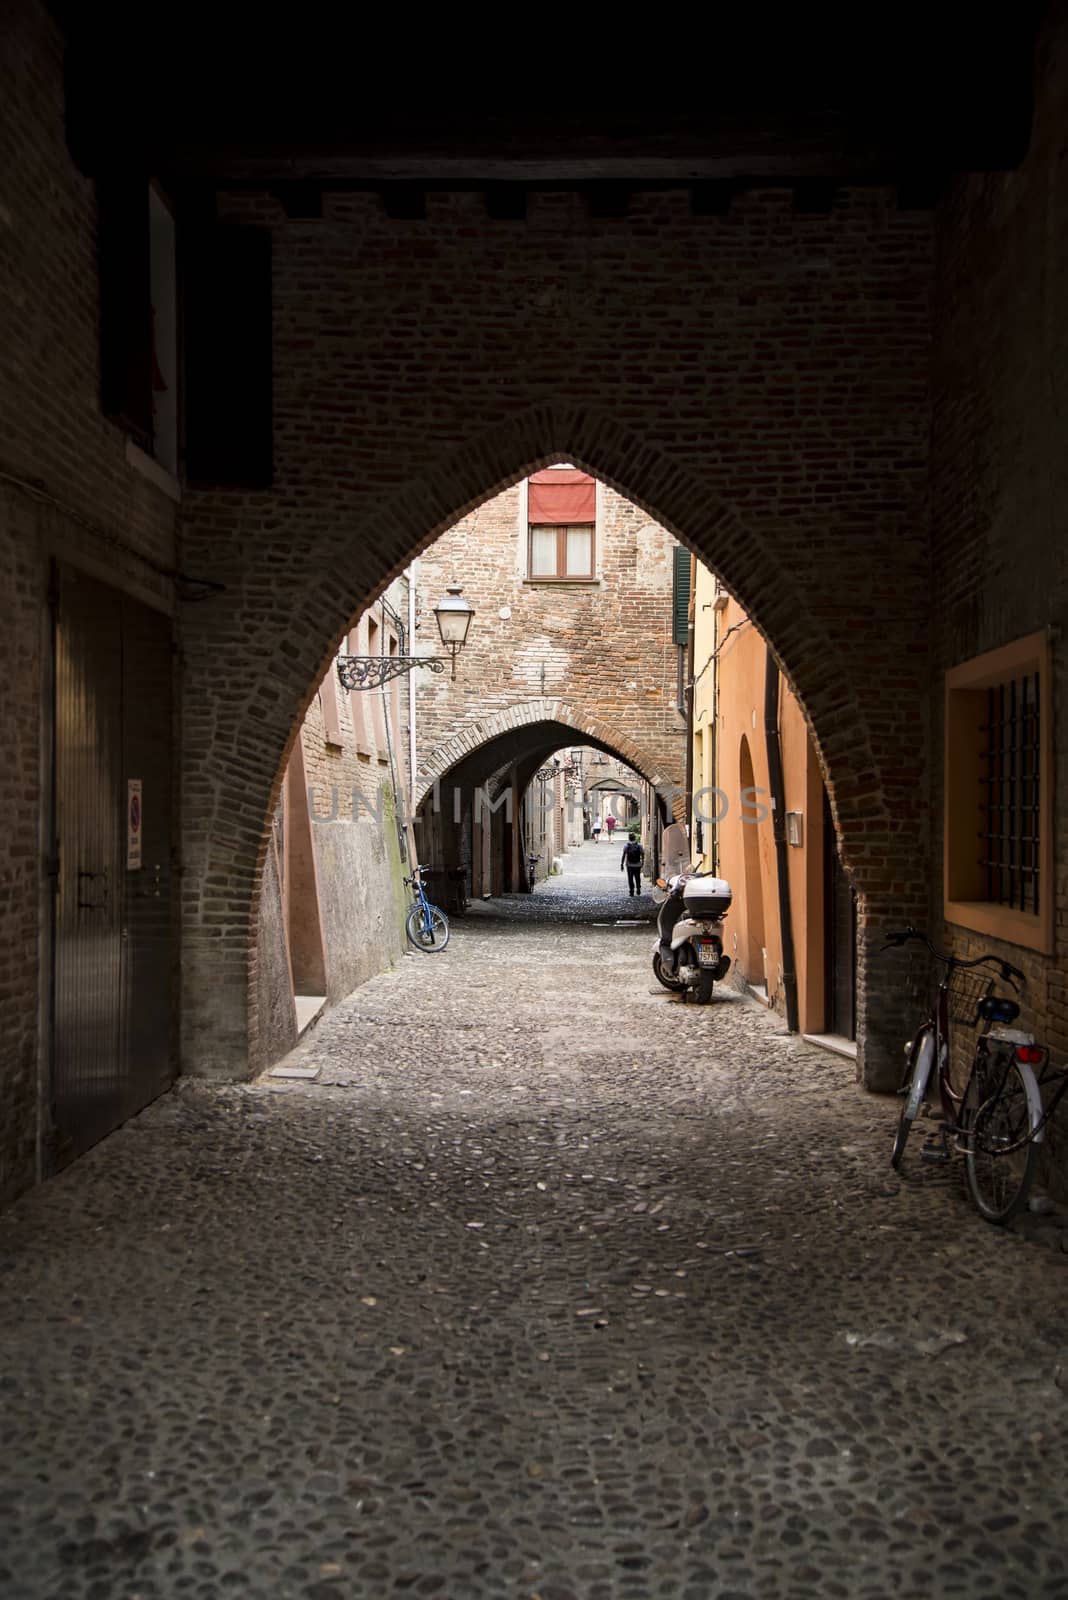 Via delle Volte, ancient medieval street in Ferrara, Italy